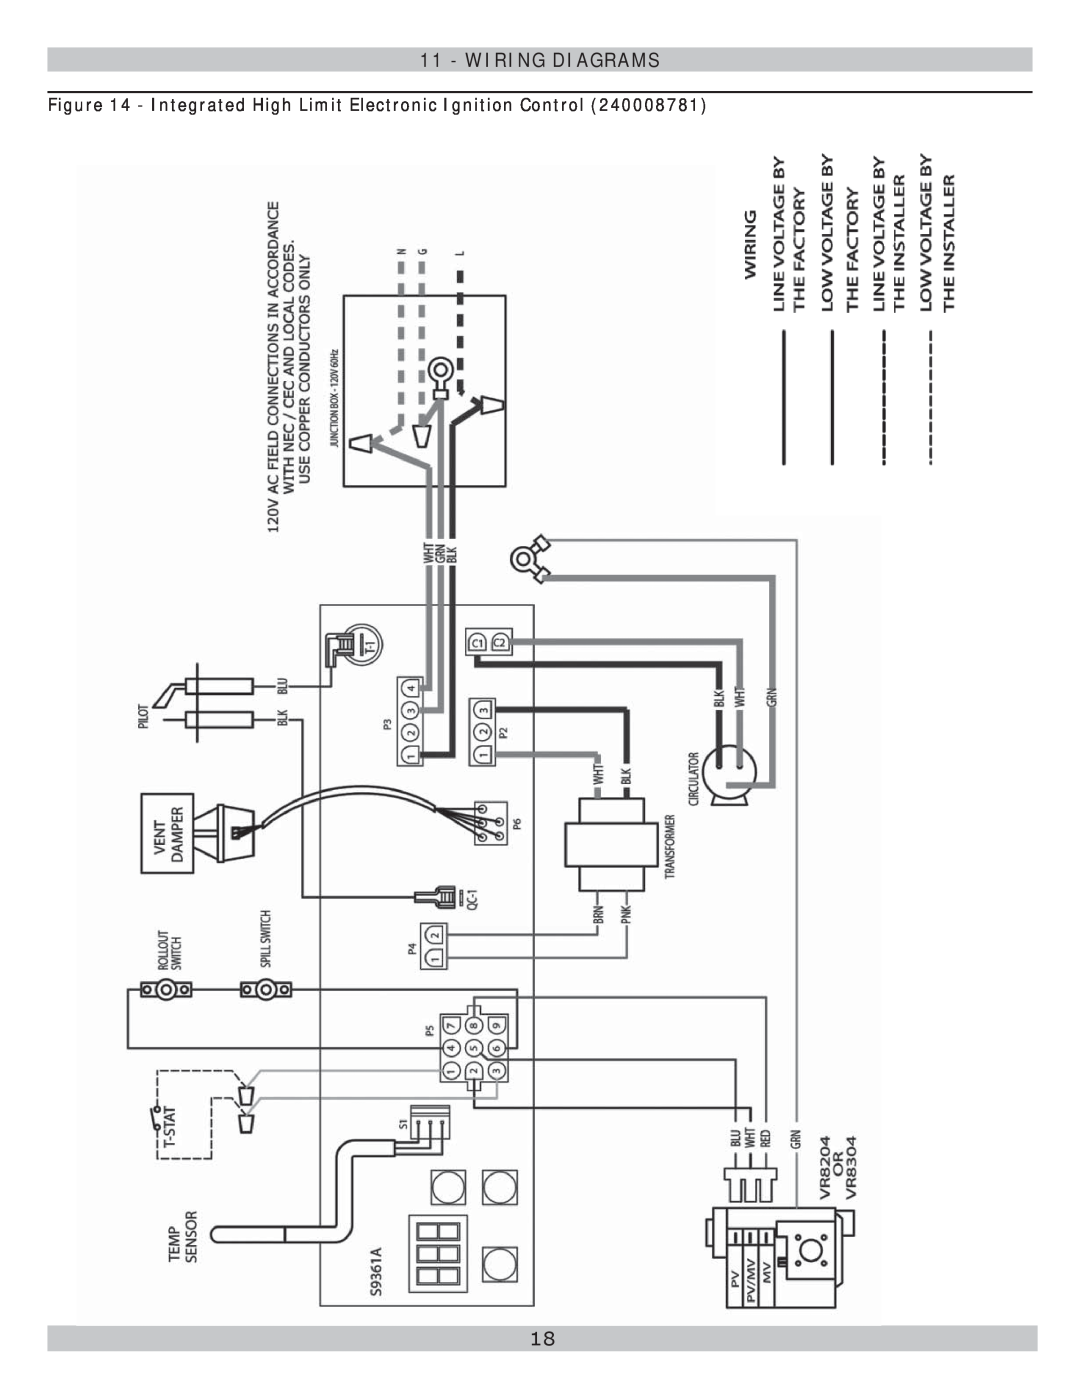 Lennox International Inc GWB8-299E-2, GWB8-262E-2 Integrated High Limit Electronic Ignition Control, Wiring Diagrams 